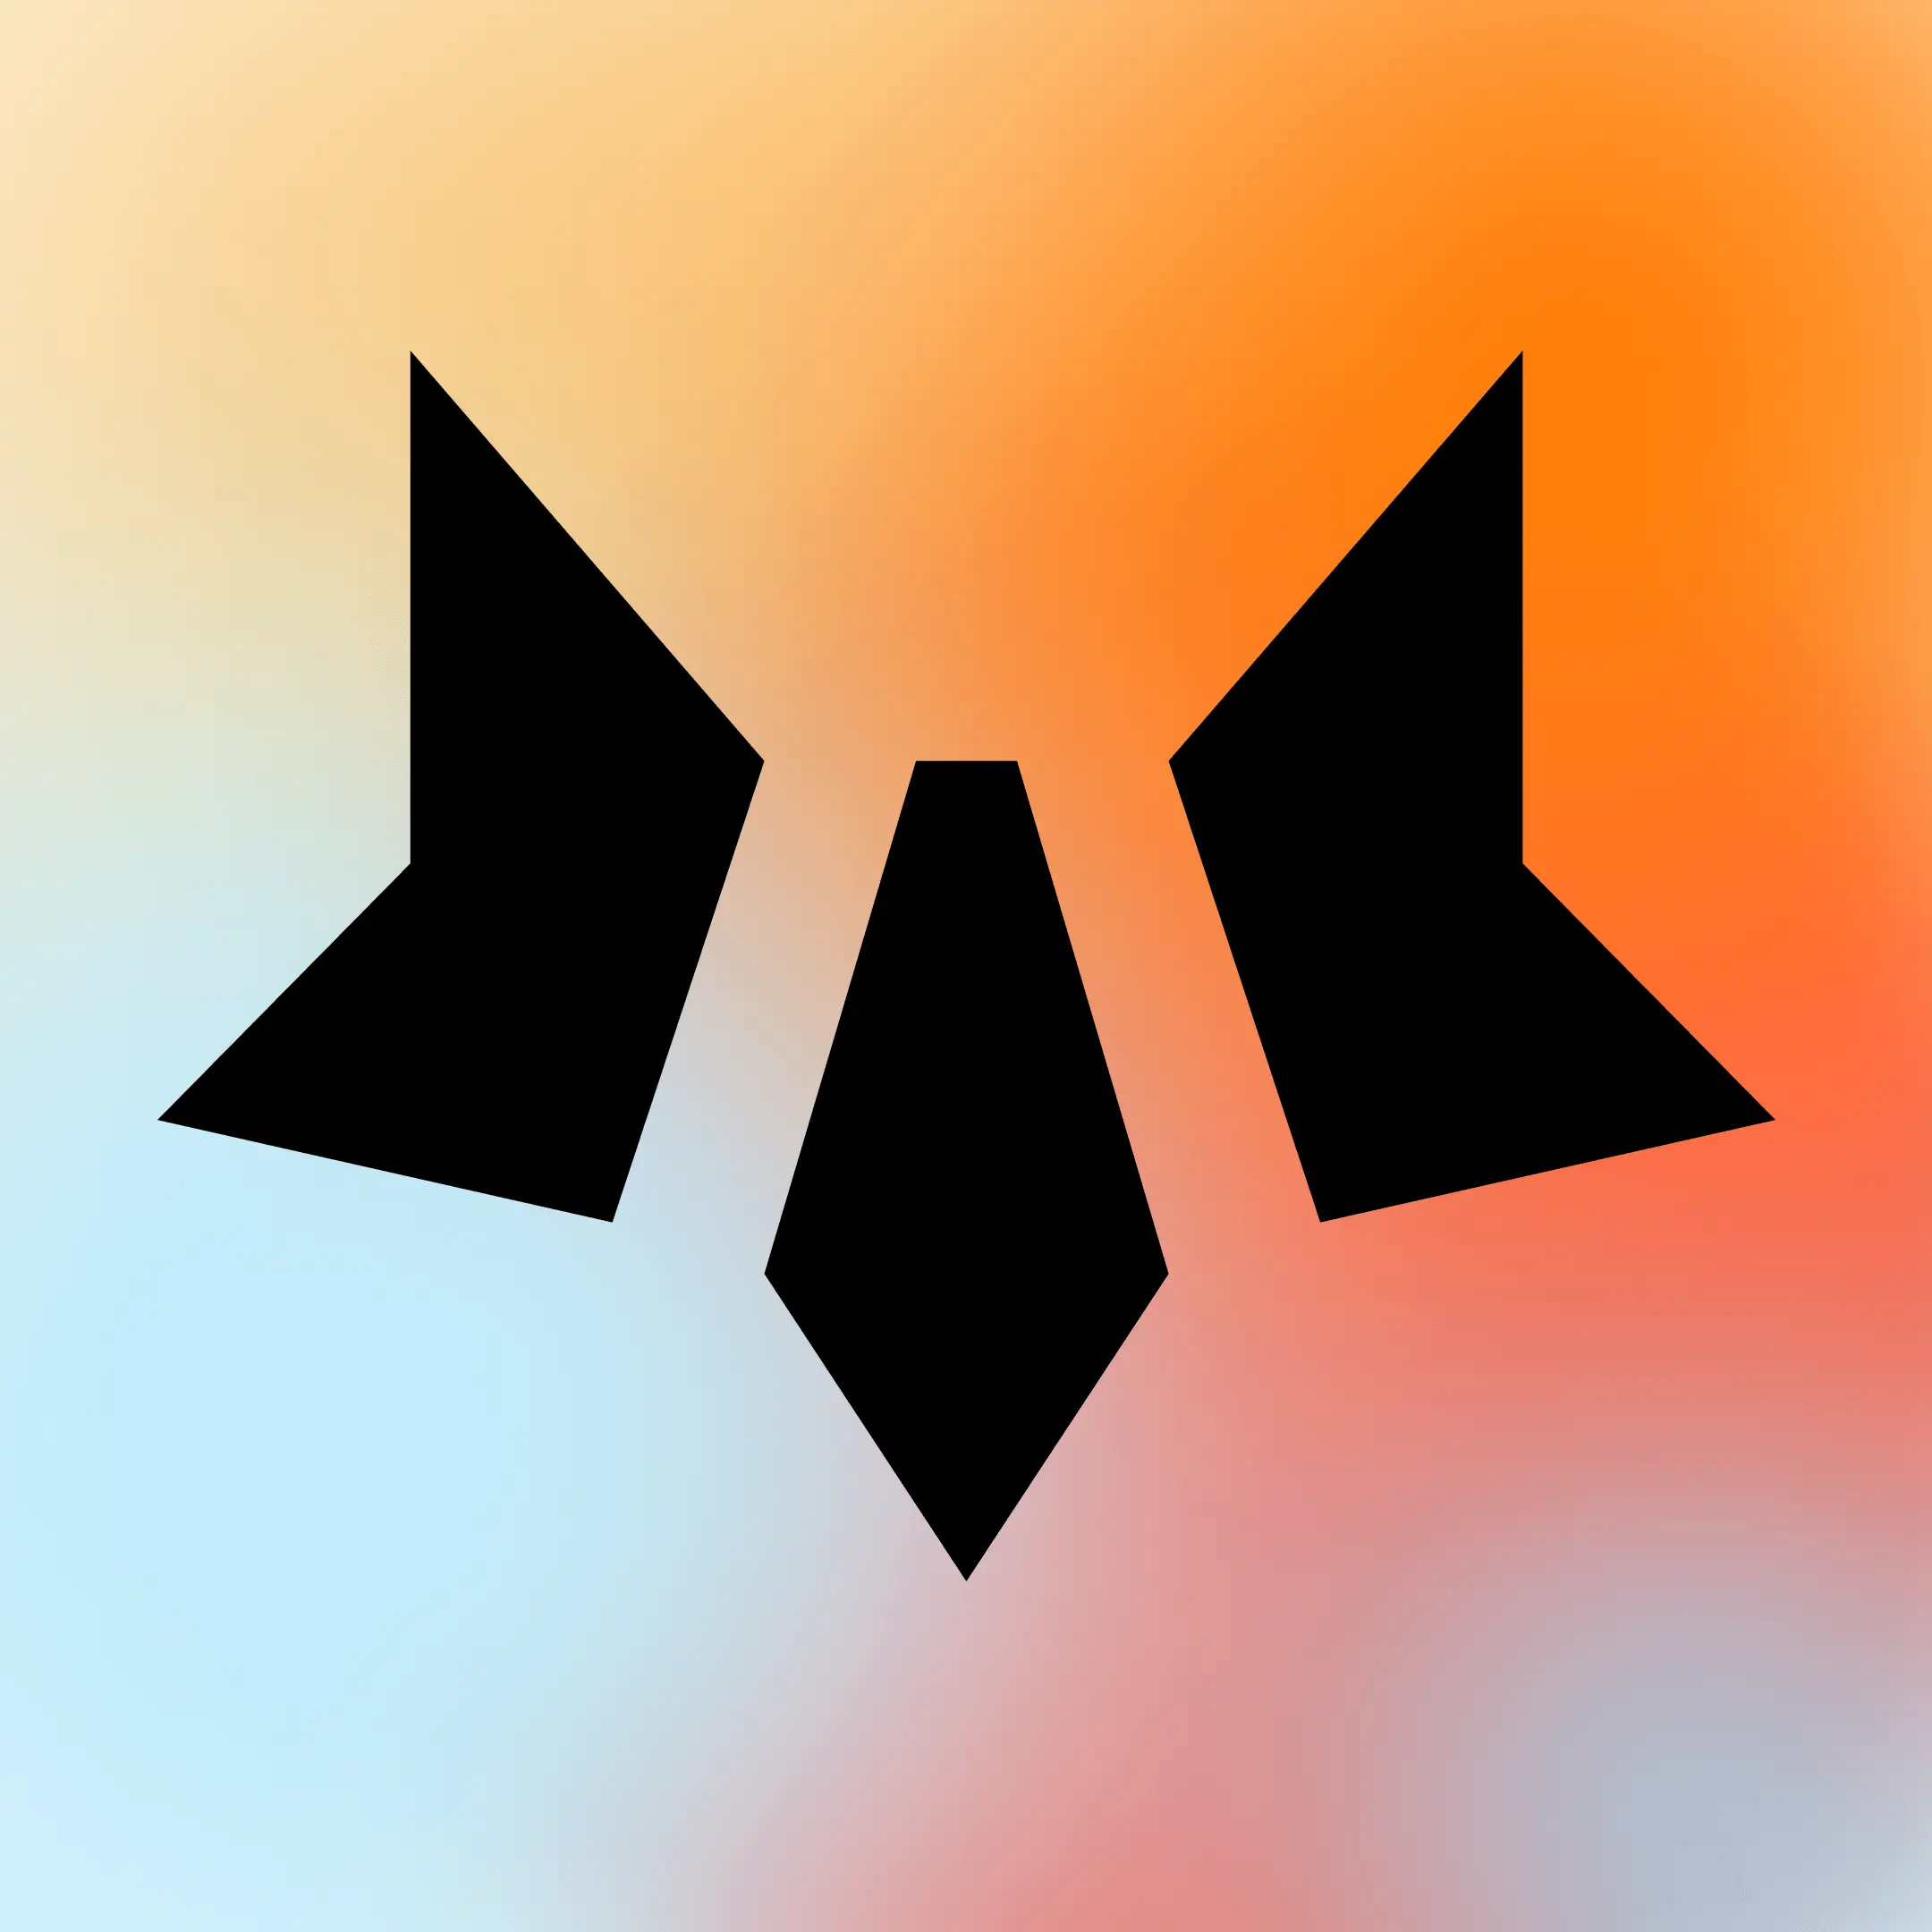 Foxify Logo